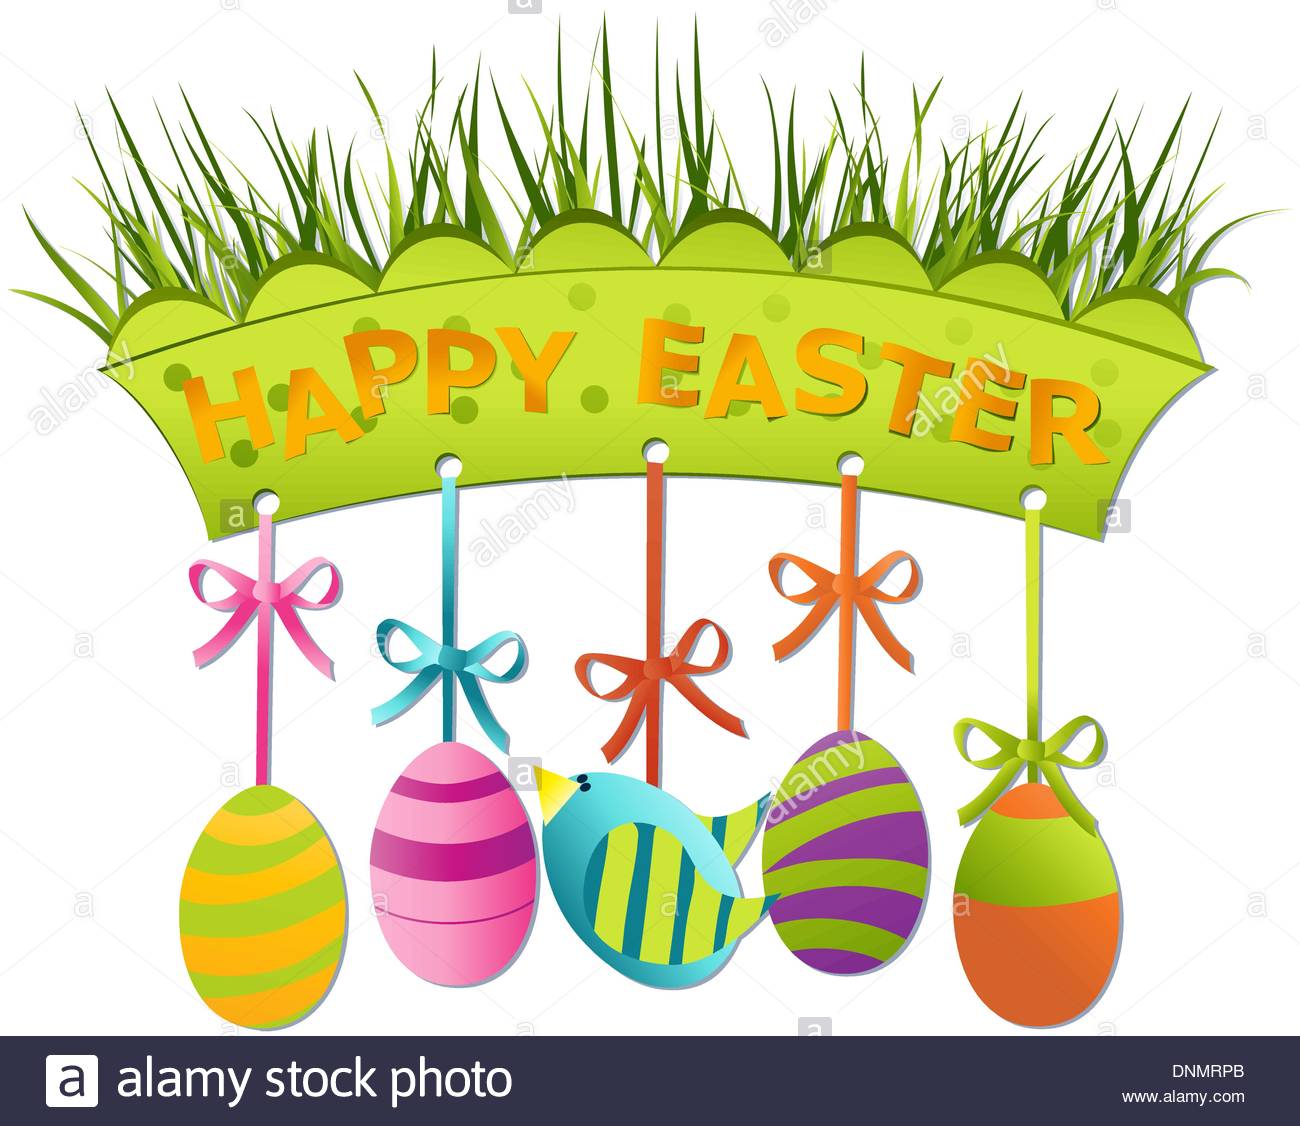 Happy Easter backgrounds Stock Vector Art Illustration Vector